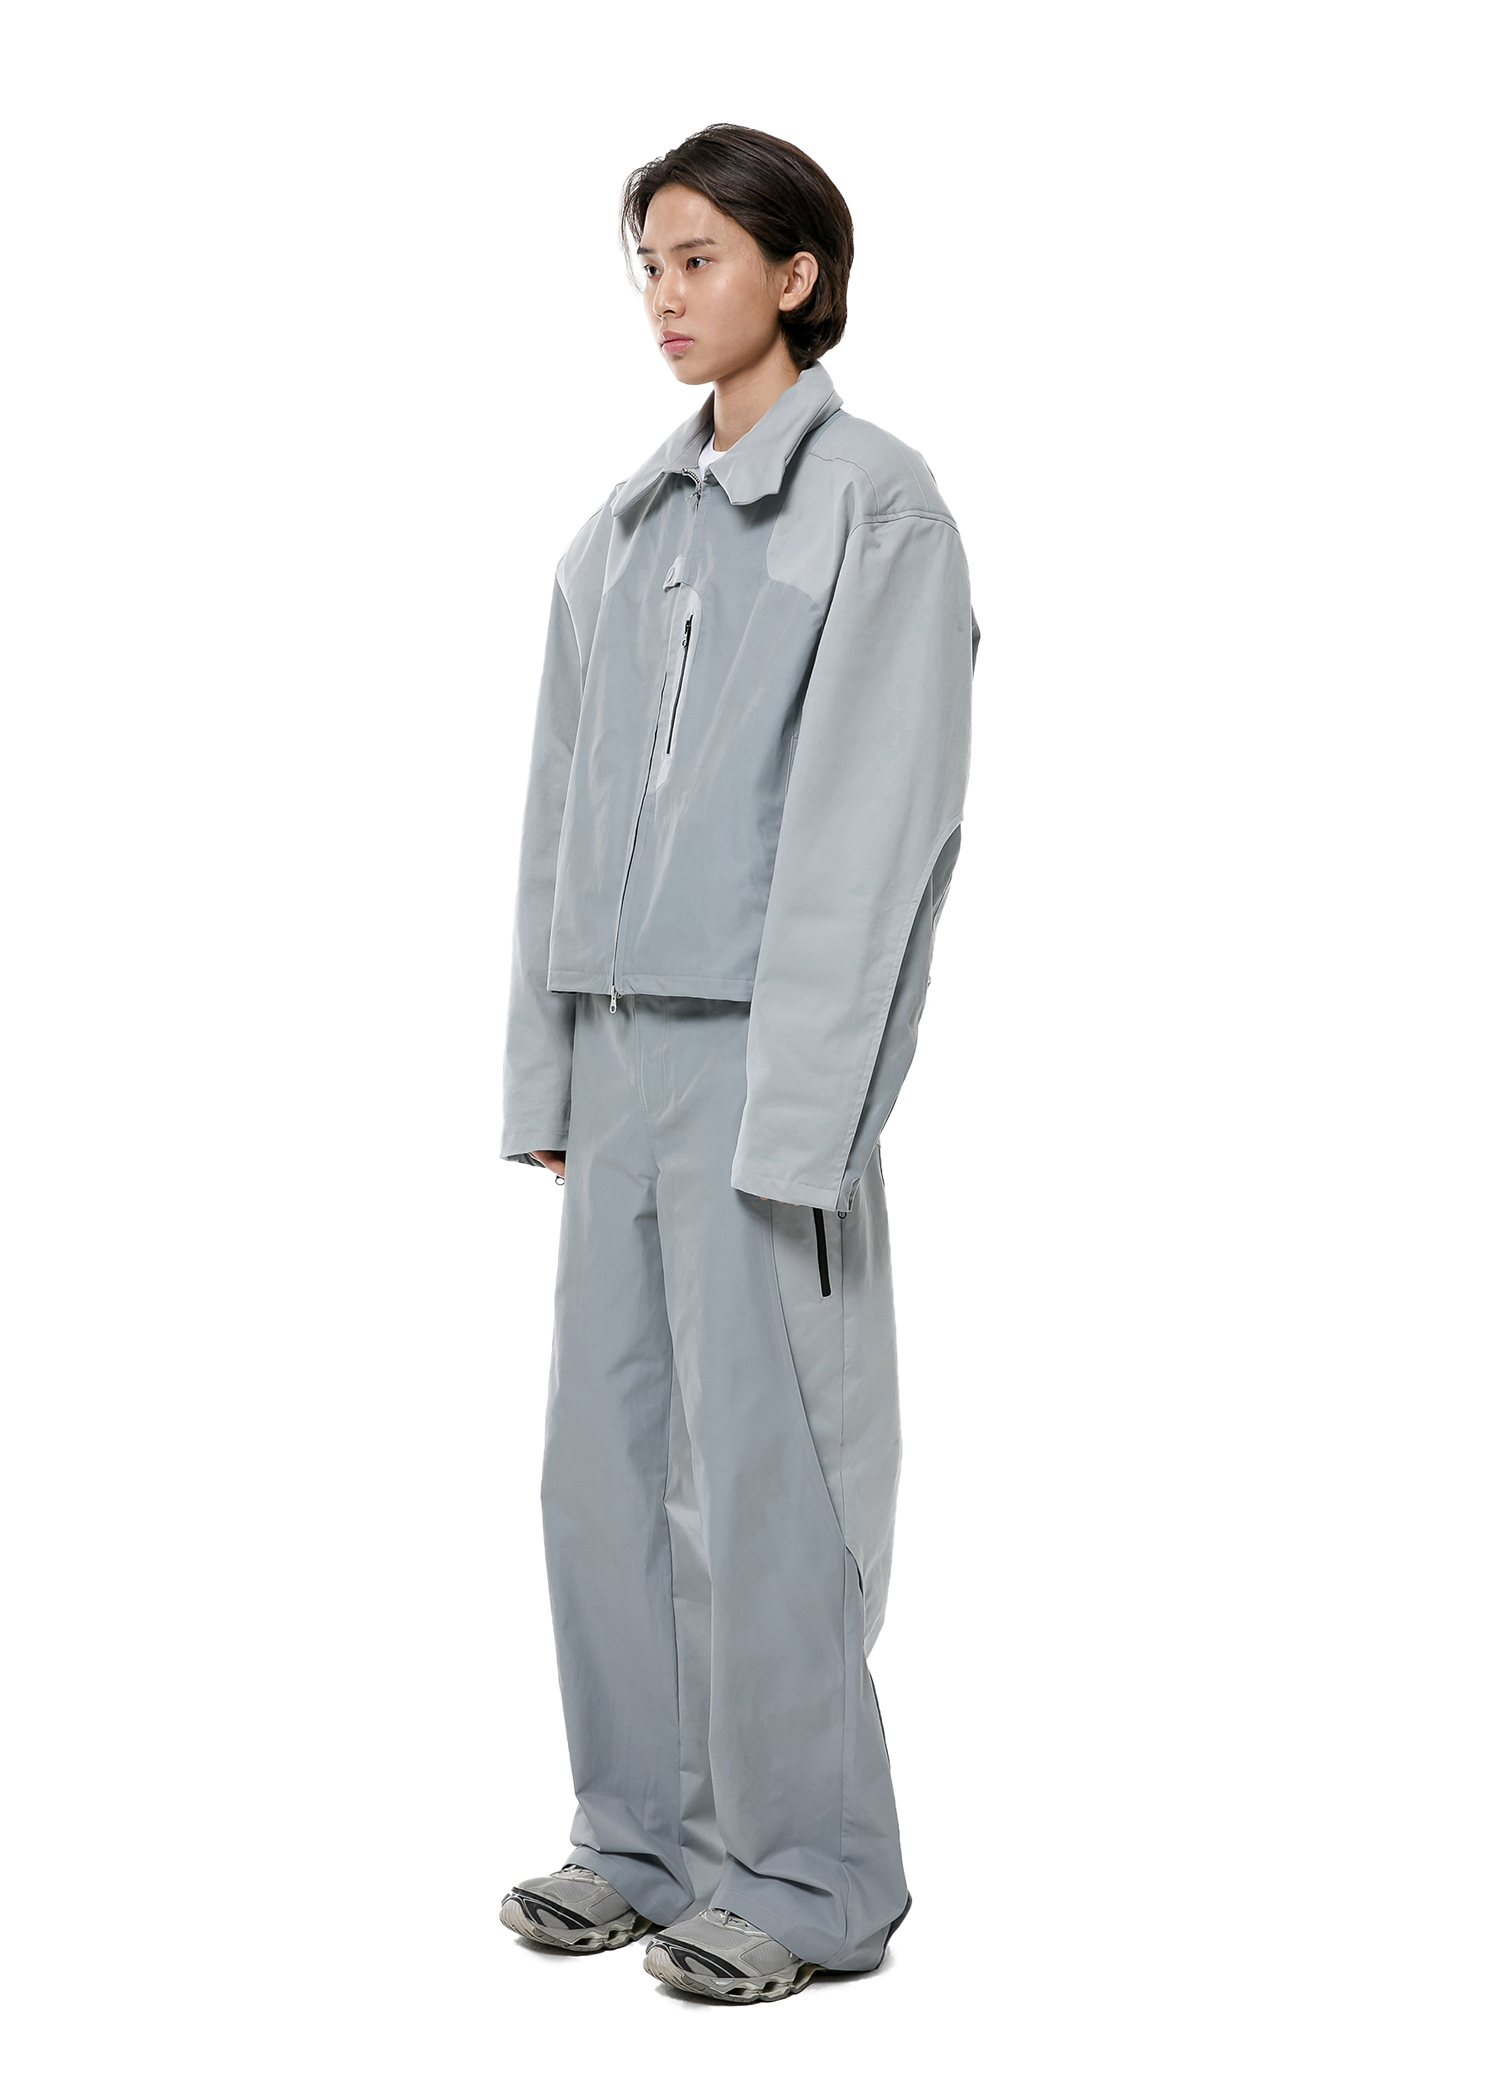 001-23 cn jacket - grey 